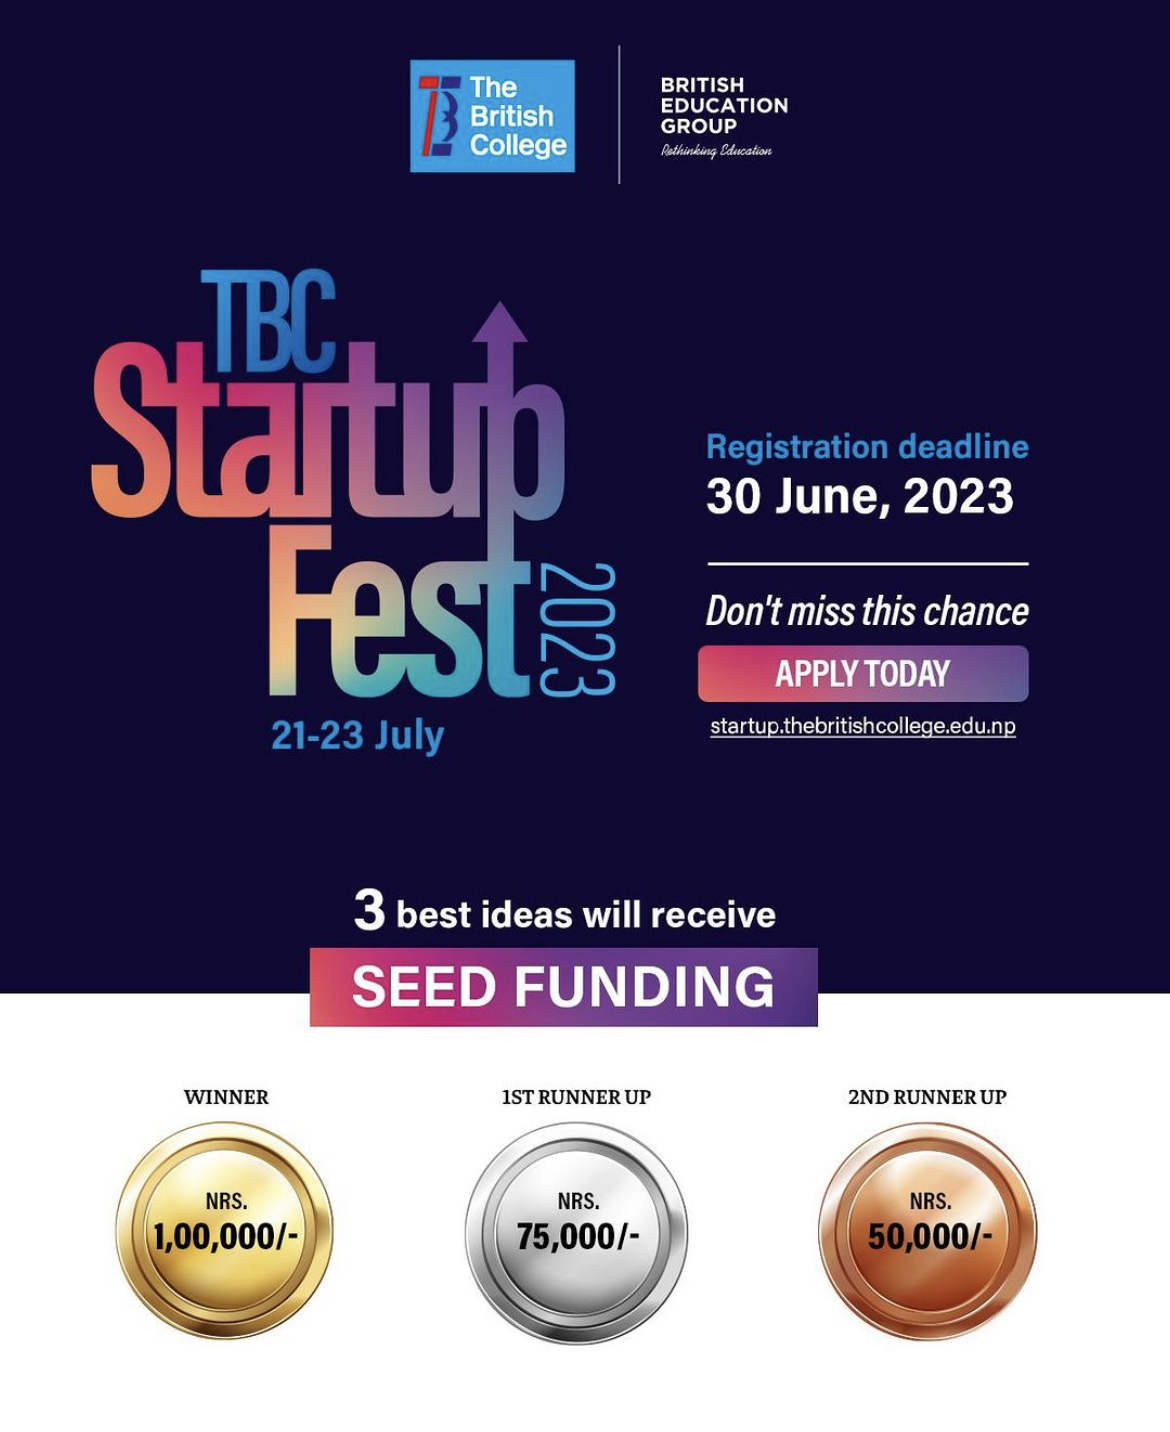 TBC Startup Fest 2023